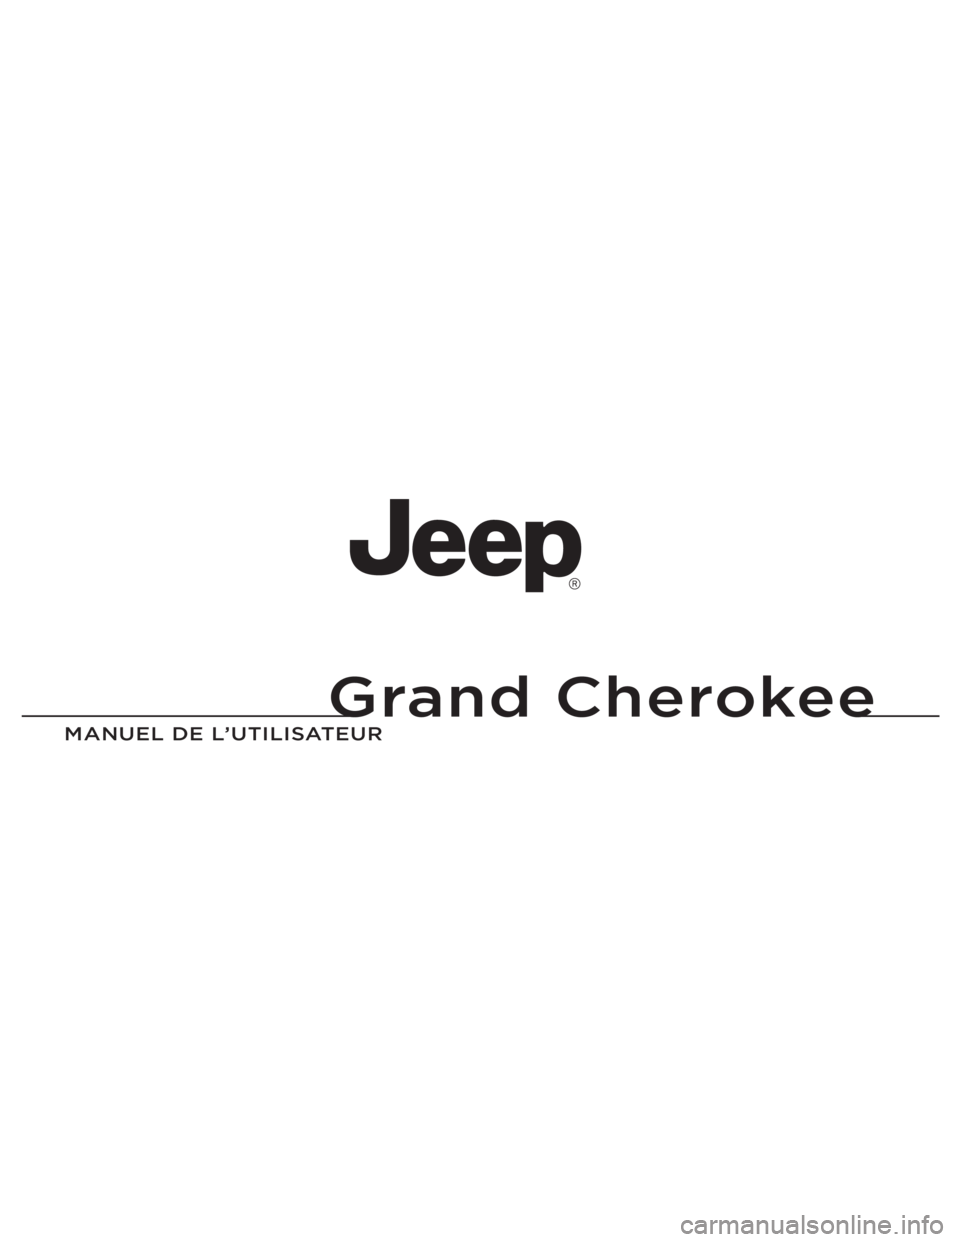 JEEP GRAND CHEROKEE 2012  Notice dentretien (in French) Grand Cherokee
MANUEL DE L’U\fILISA\fEUR 